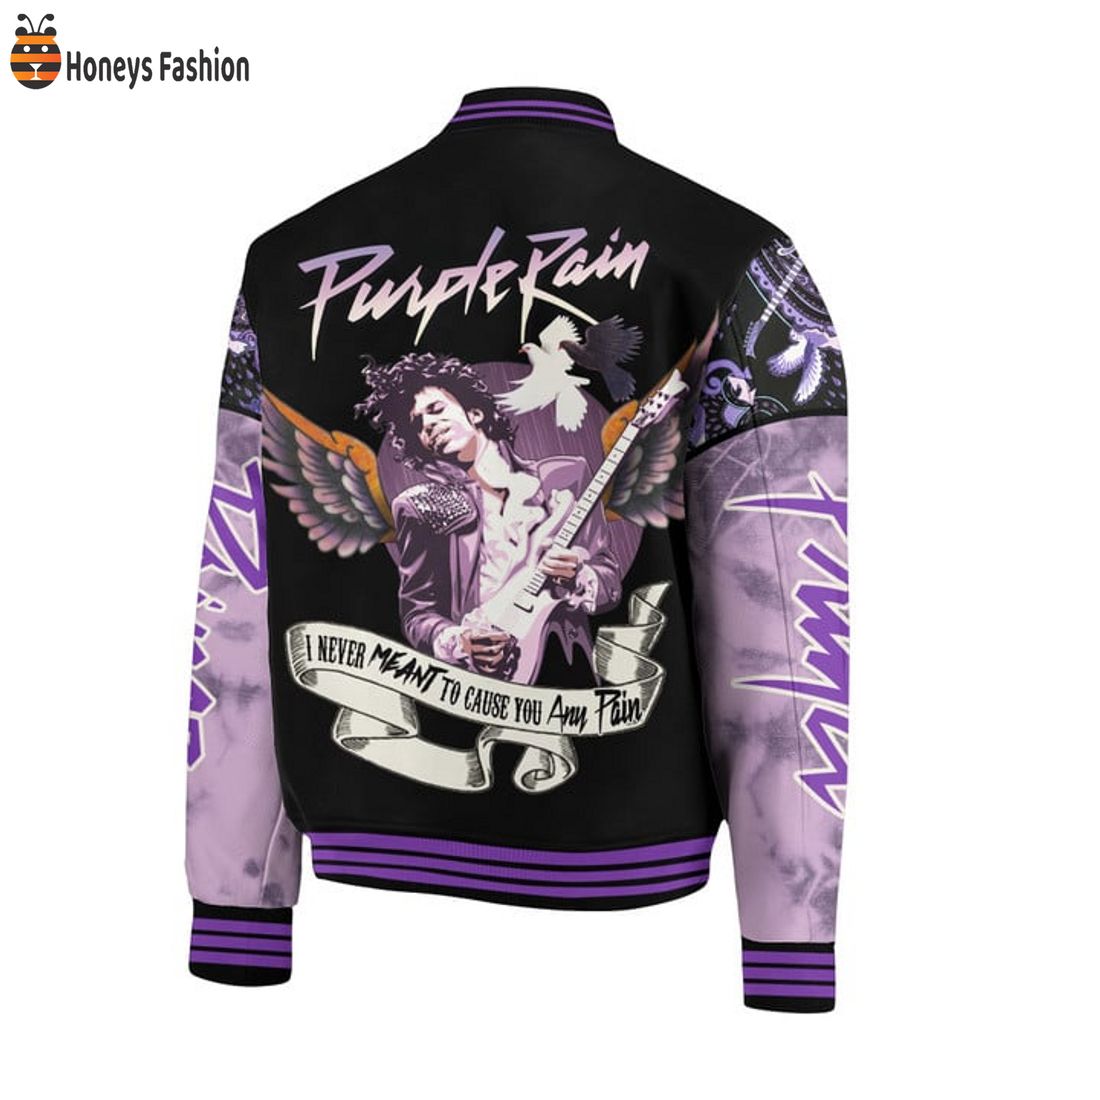 TRENDING Prince Purple Rain I Never Meant To Cause You Any Pain Baseball Jacket